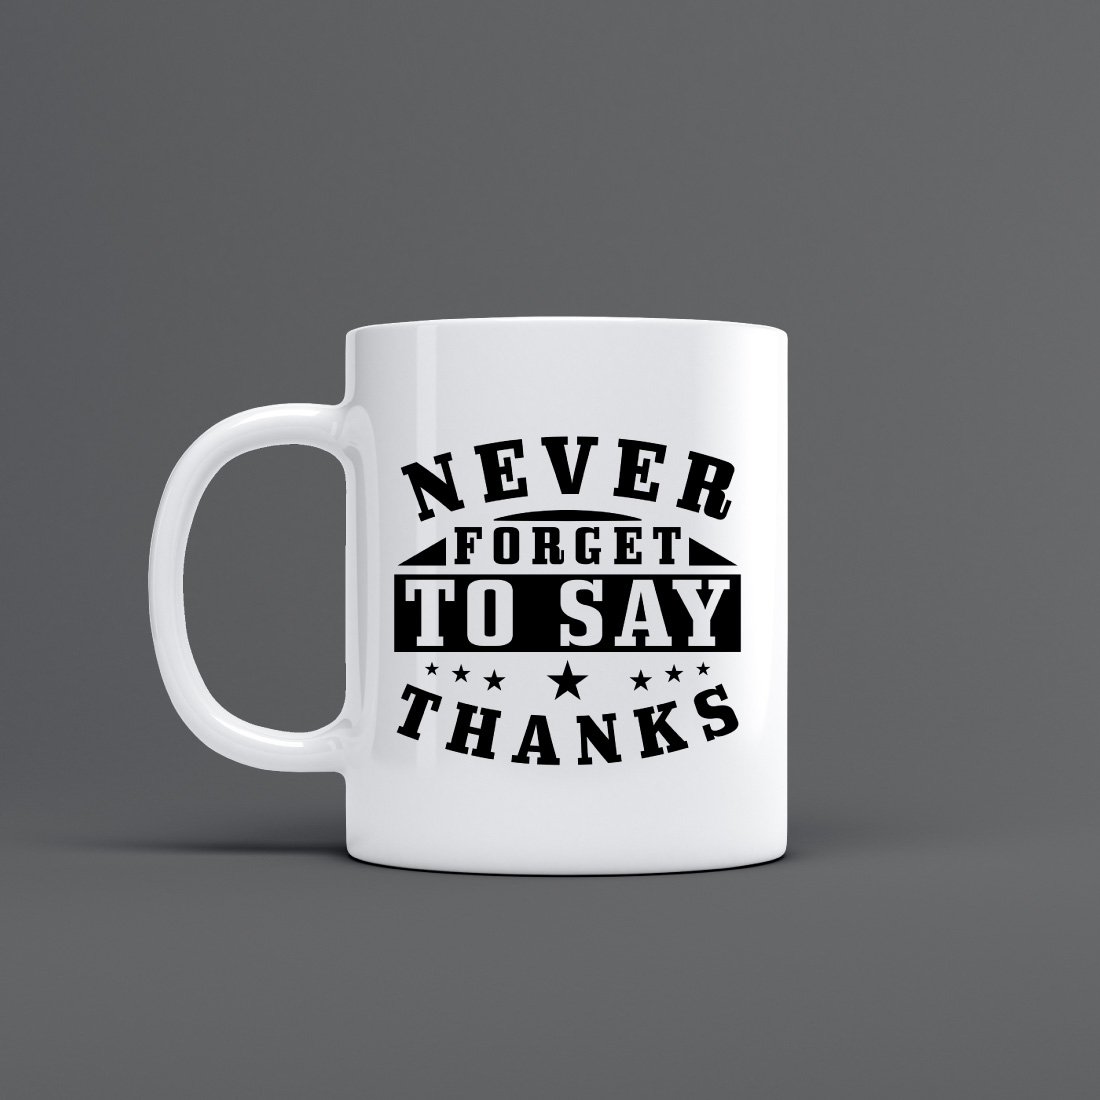 never forget to say thanks mug design 993